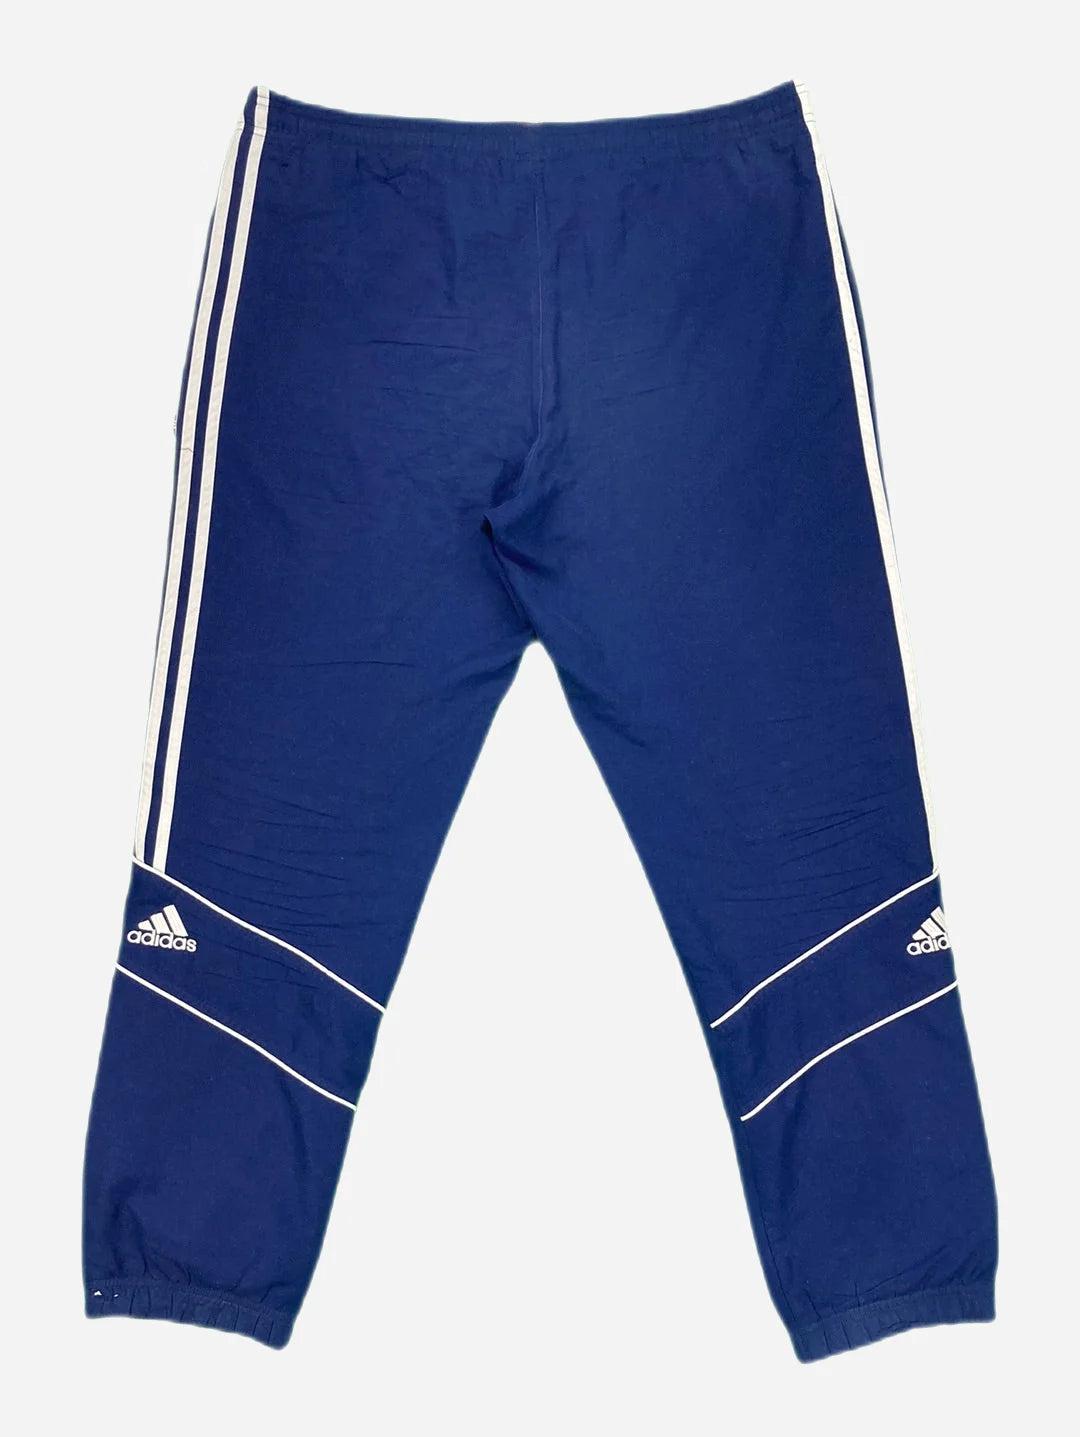 Adidas Track Pants (L)